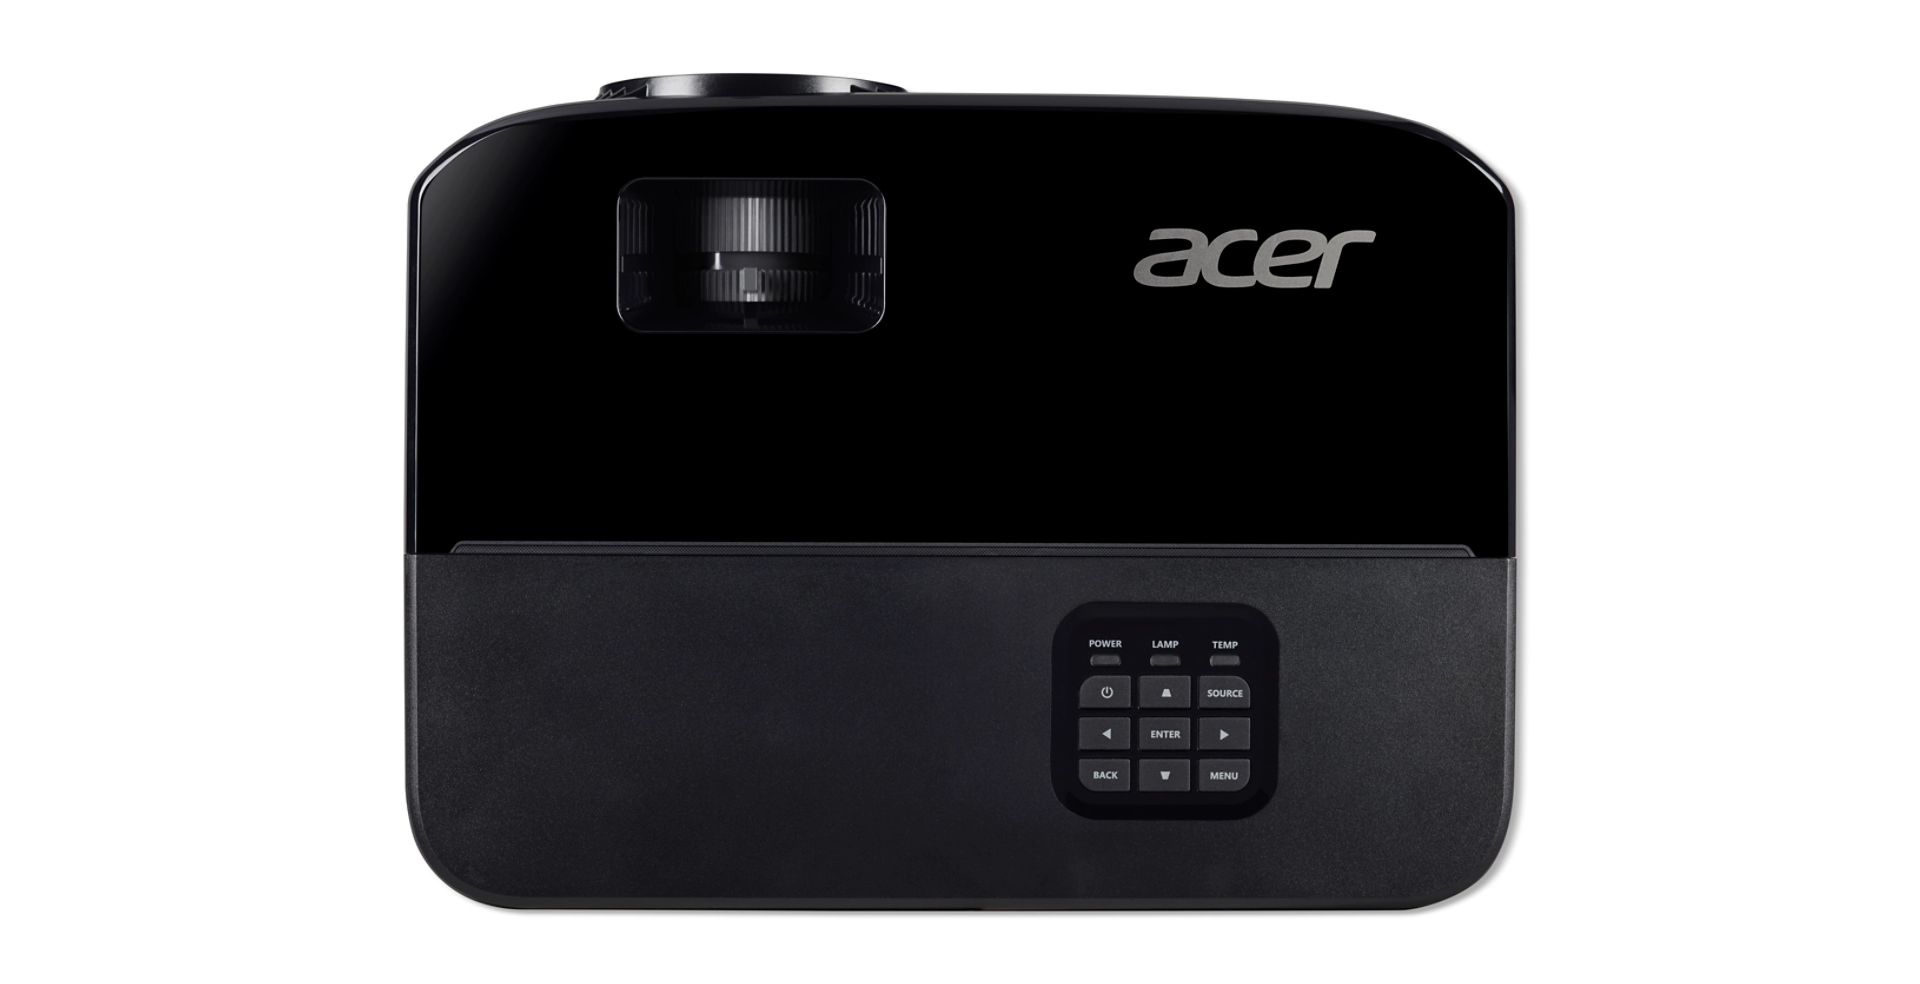 Videoproiector Acer X1129HP, DLP, SVGA 800*600, up to WUXGA 1920* 1200, 4.500 lumeni, 4:3/ 16:9, 20.000:1, dimensiune maxima imagine 300